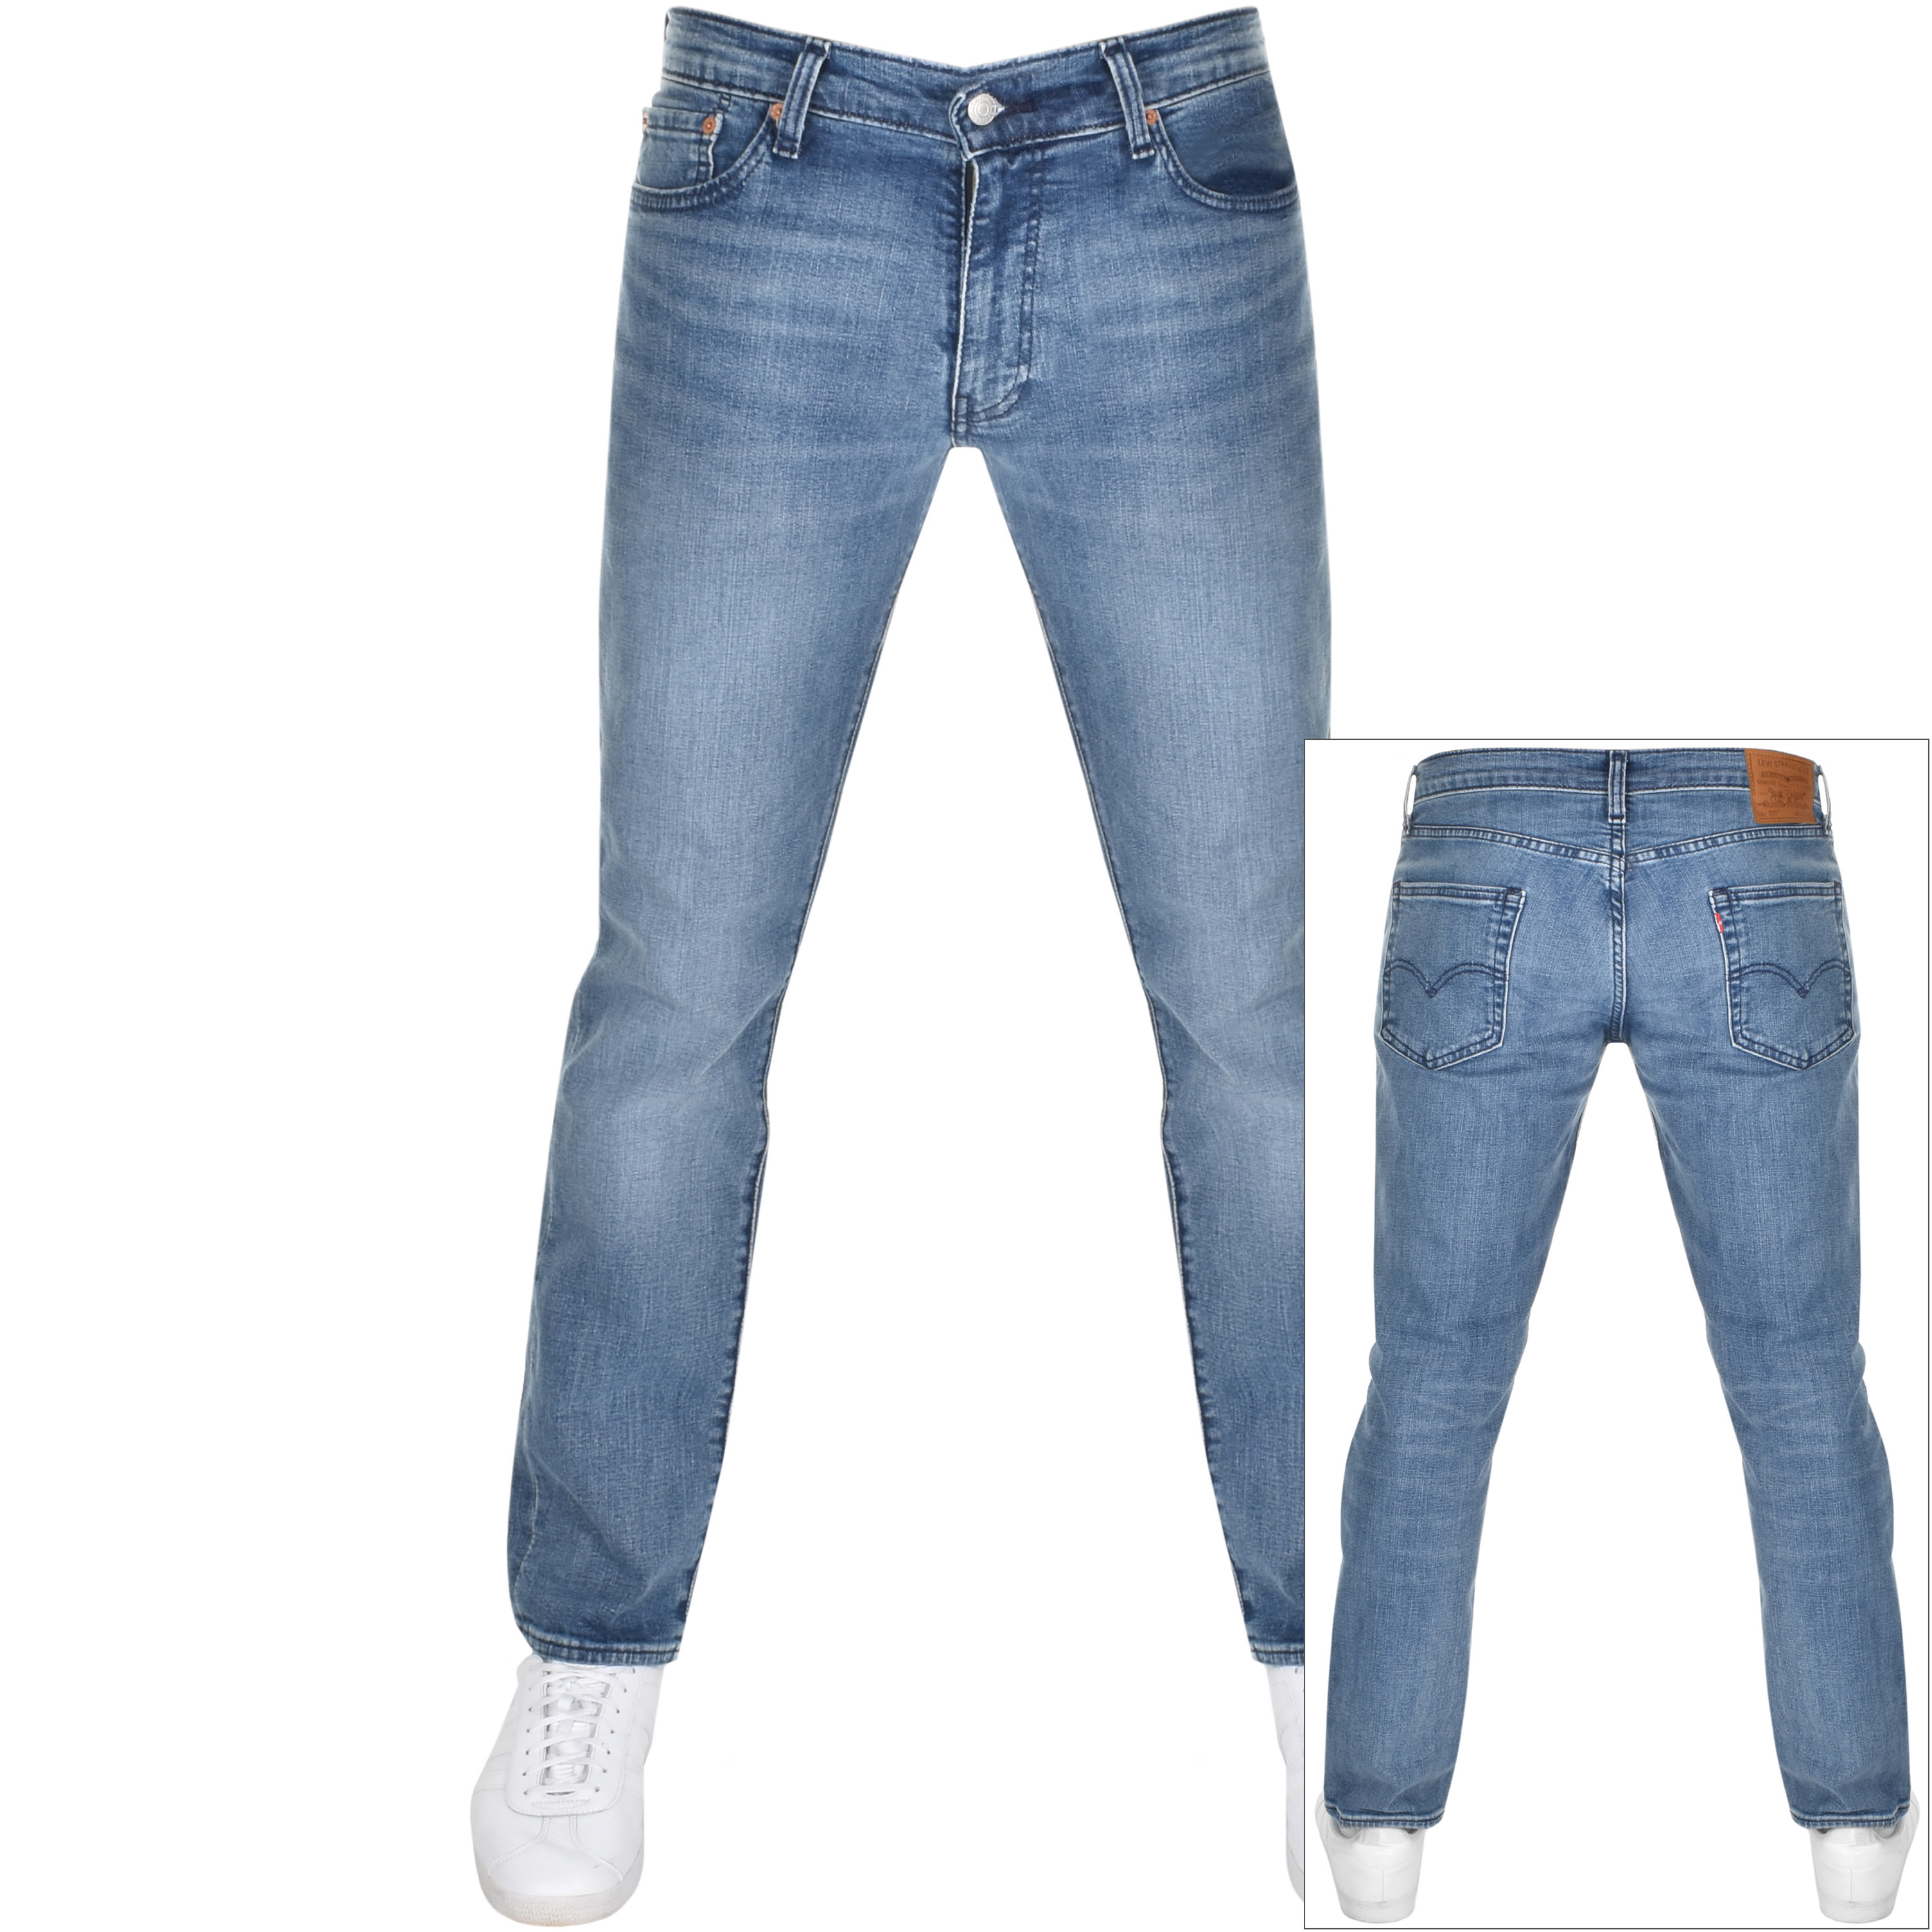 levi's 603 stretch jeans Cheaper Than 